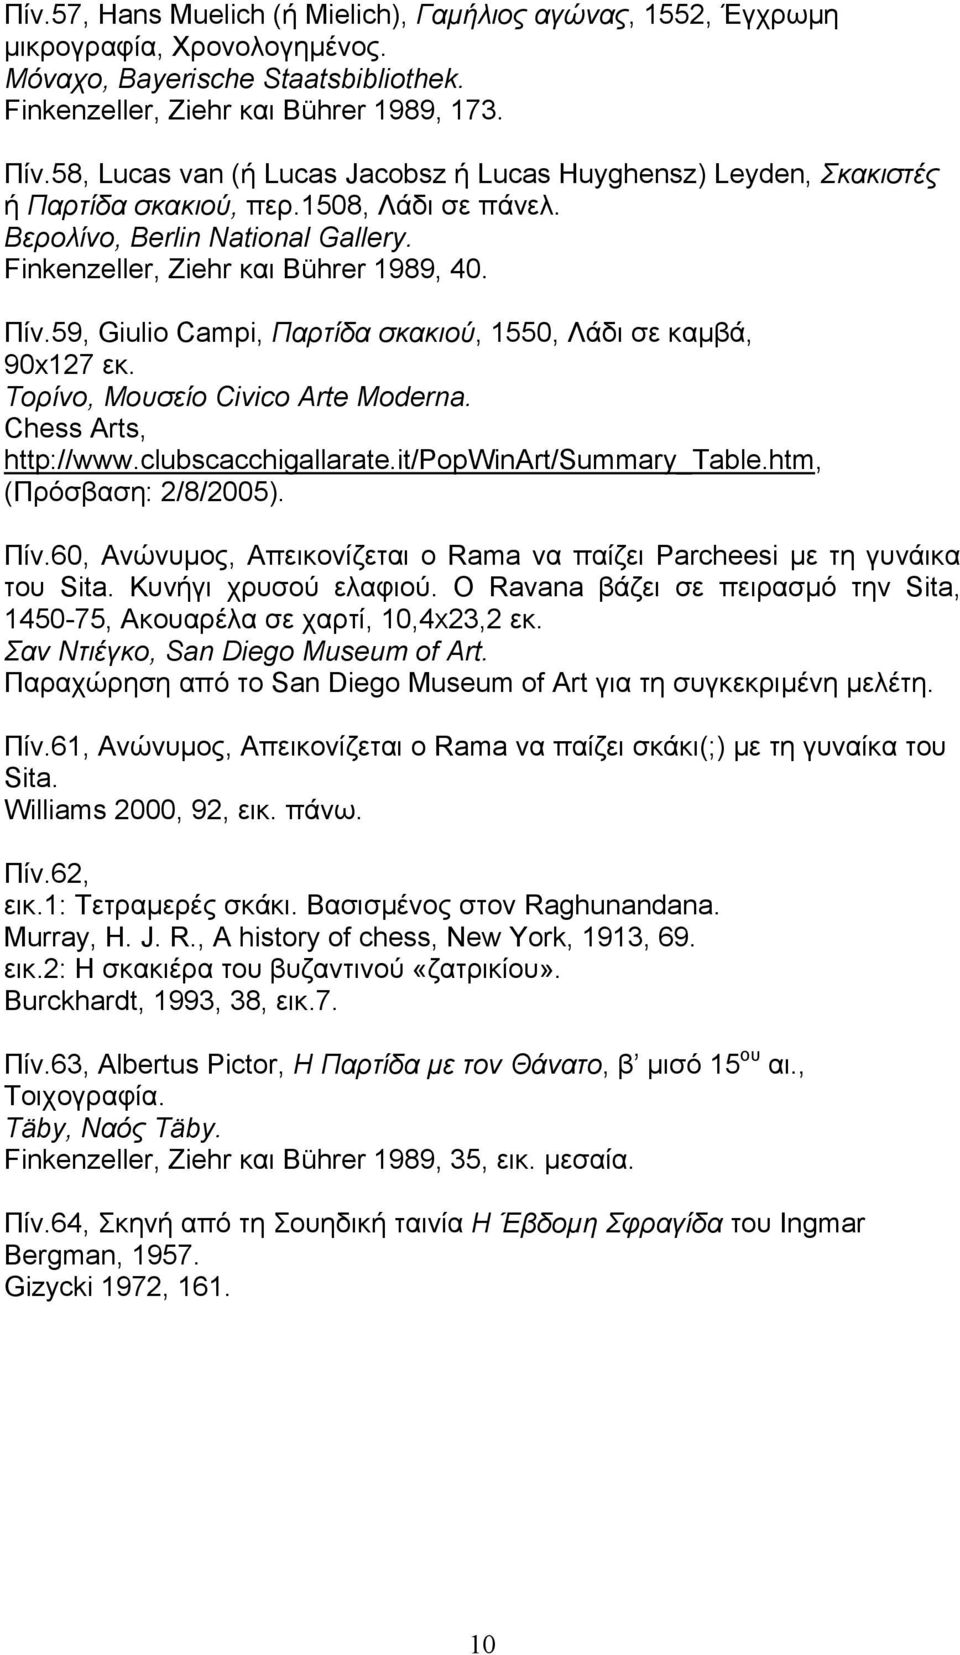 59, Giulio Campi, Παρτίδα σκακιού, 1550, Λάδι σε καµβά, 90x127 εκ. Τορίνο, Μουσείο Civico Arte Moderna. Chess Arts, http://www.clubscacchigallarate.it/popwinart/summary_table.